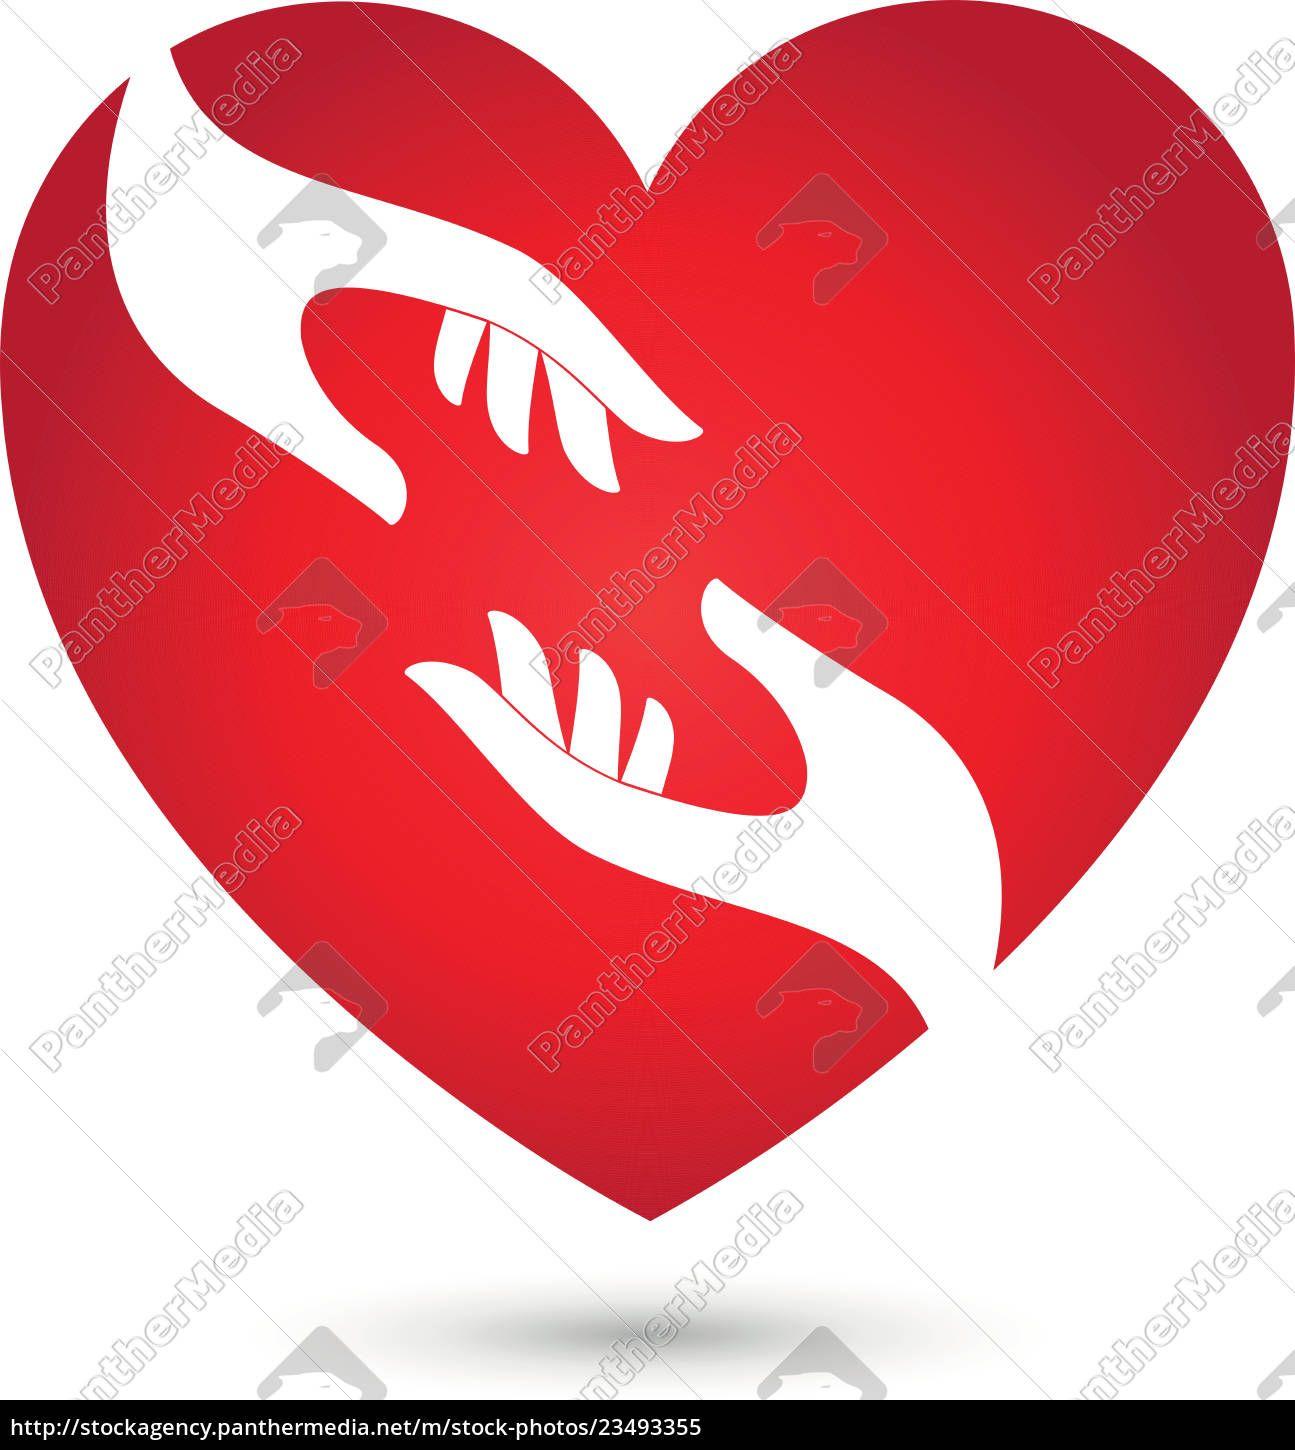 Heart with Hands Logo - heart and hands, heart, hands, logo